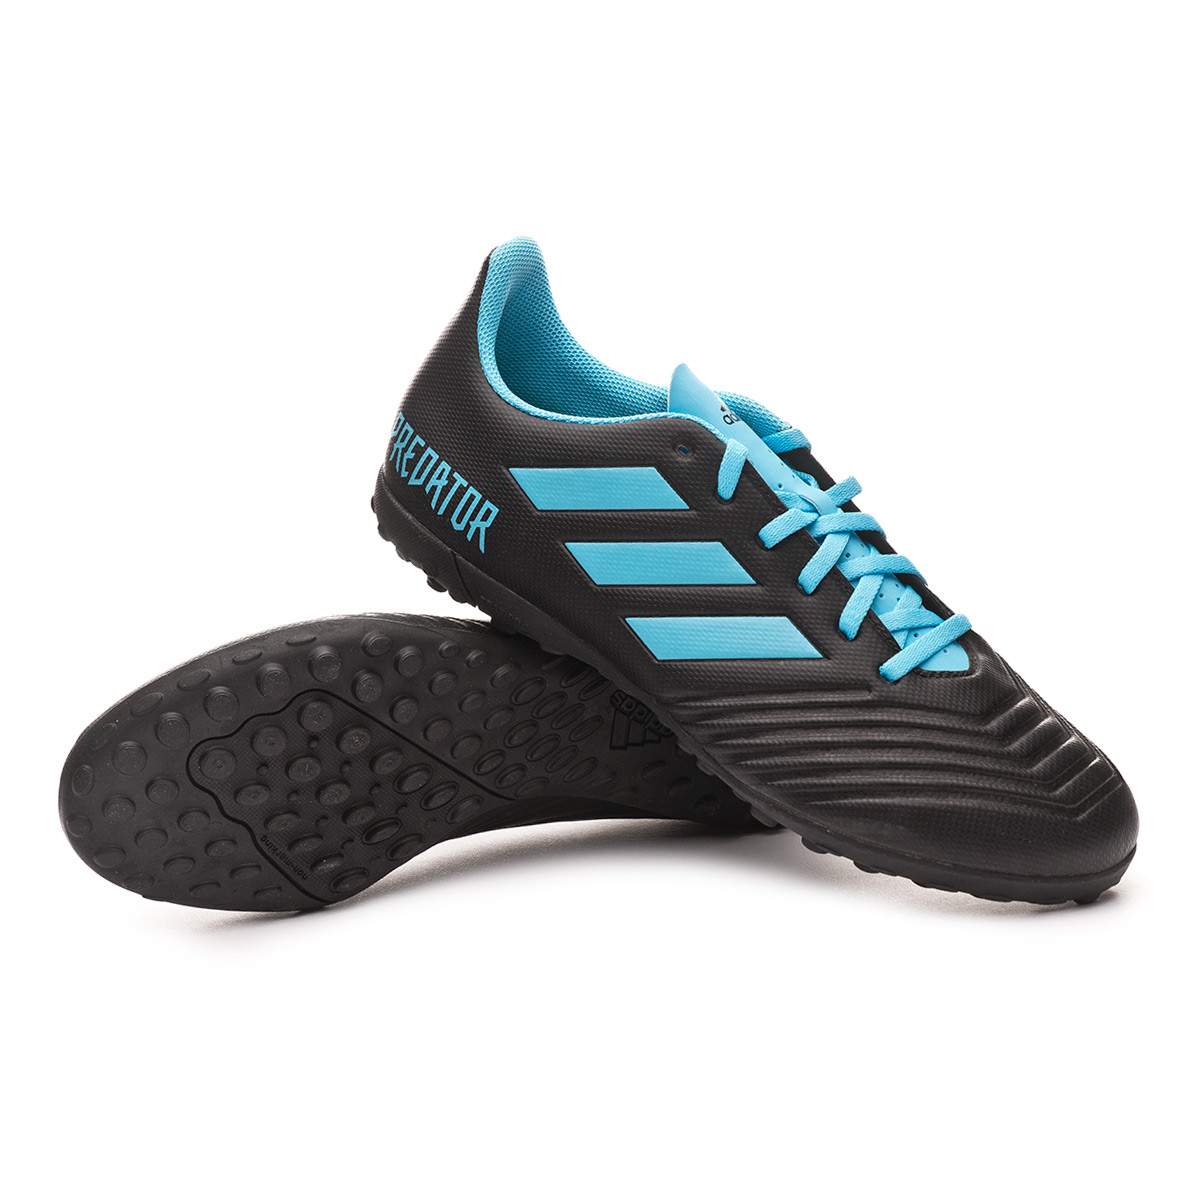 Football Boots adidas Predator 19.4 